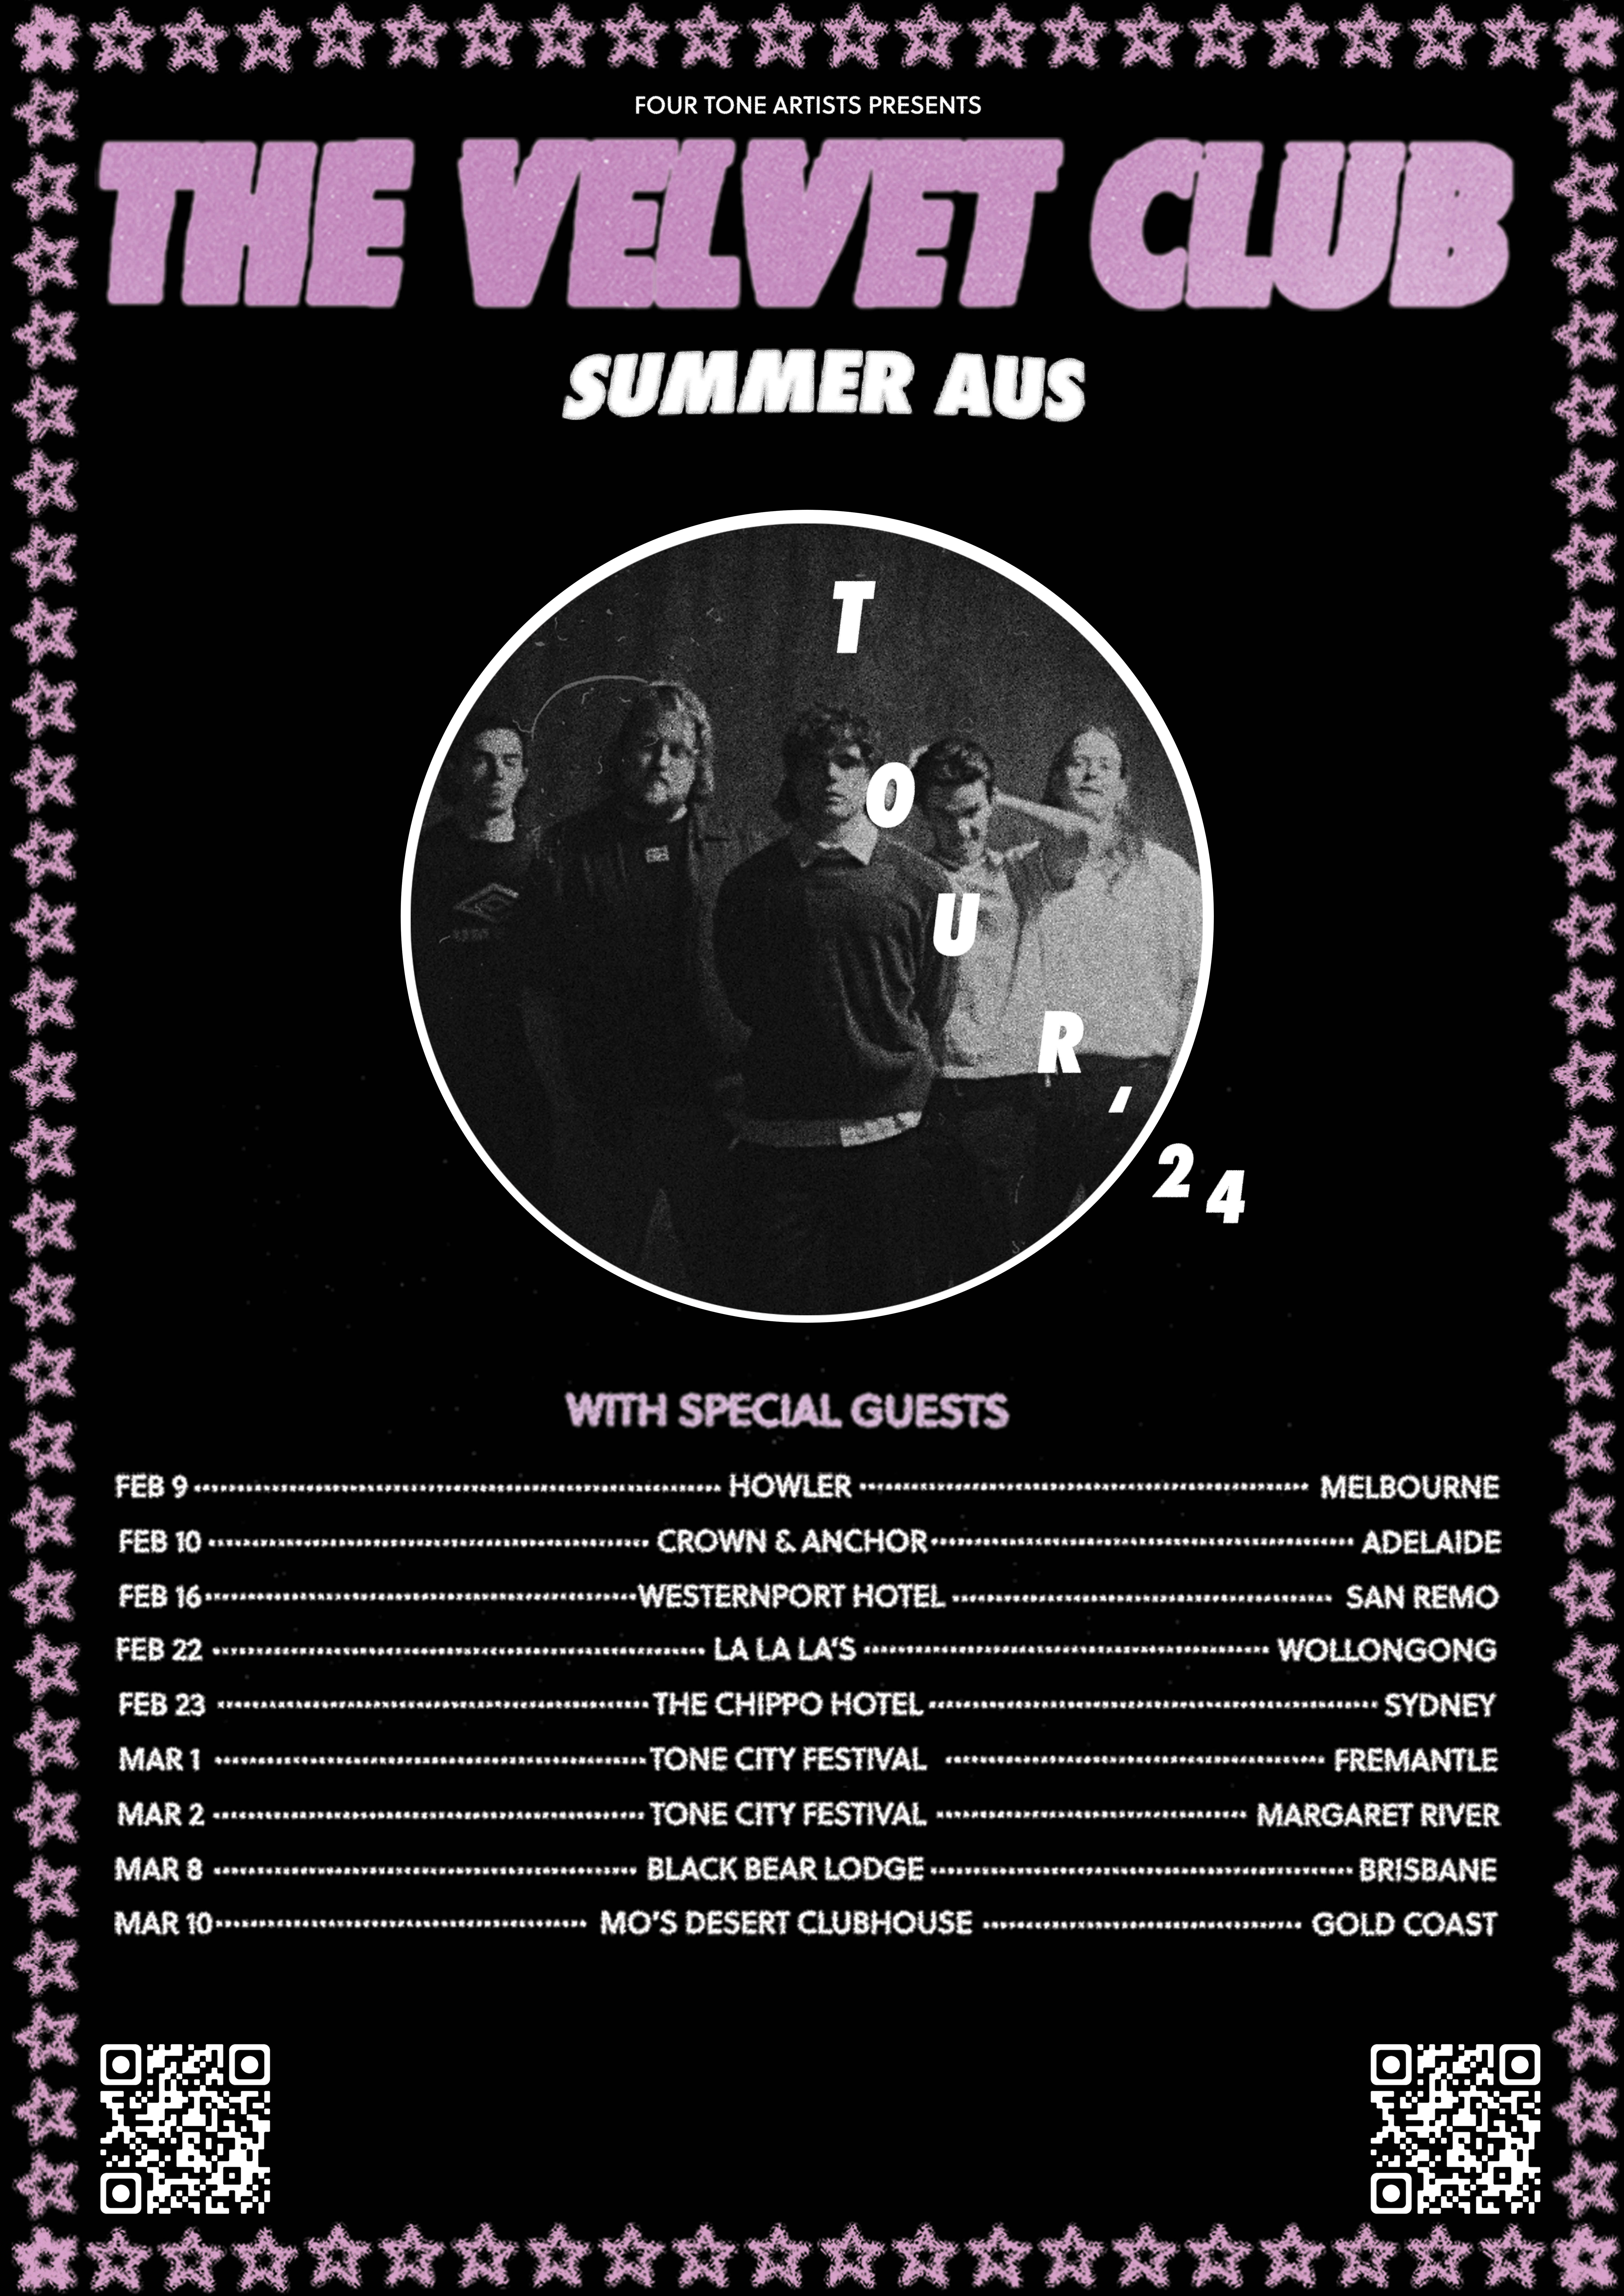 Aus Summer Tour Poster - The Velvet Club